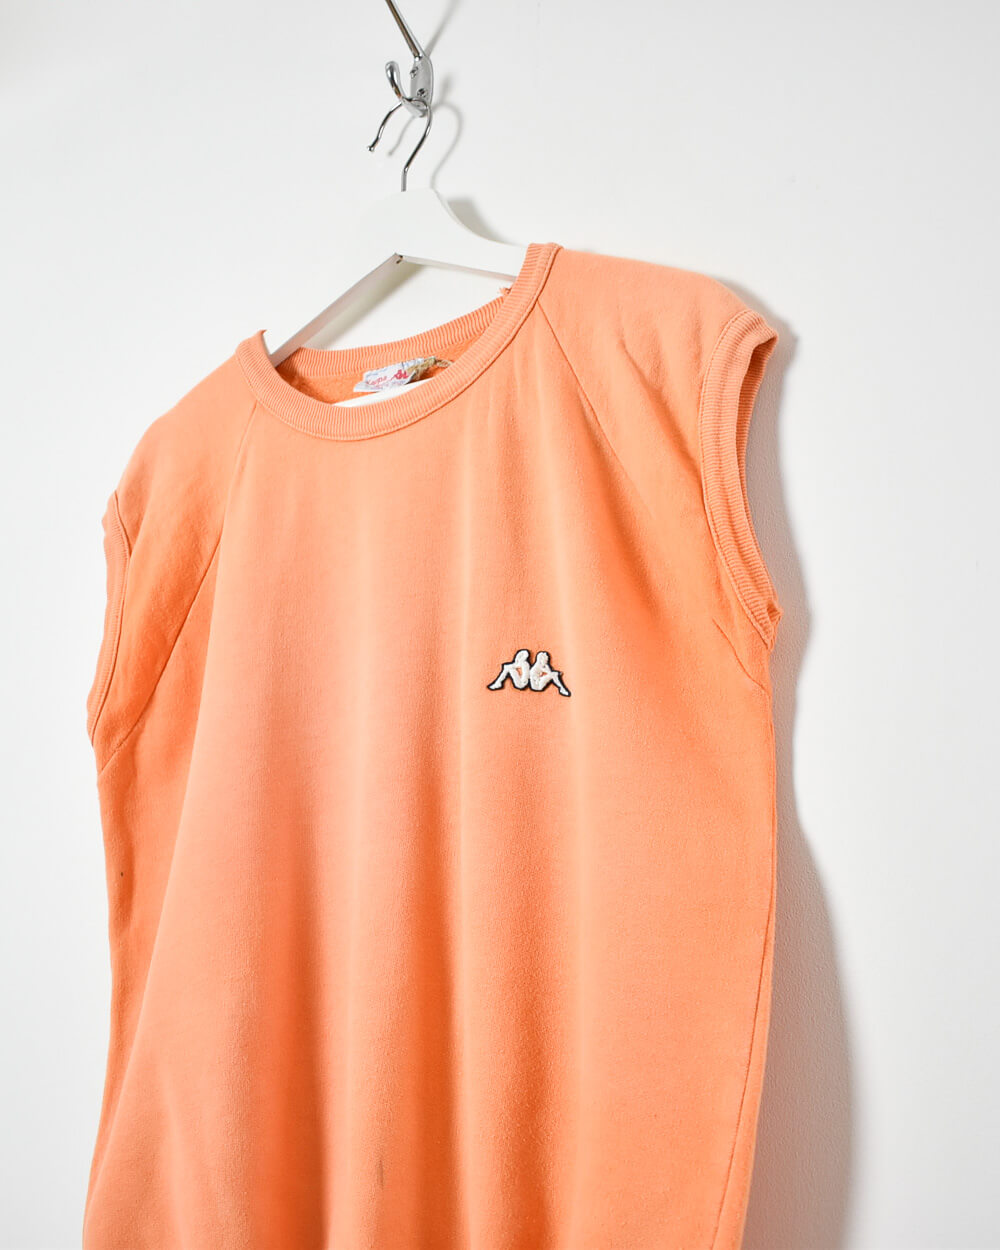 Orange Kappa Sleeveless Sweatshirt - Small